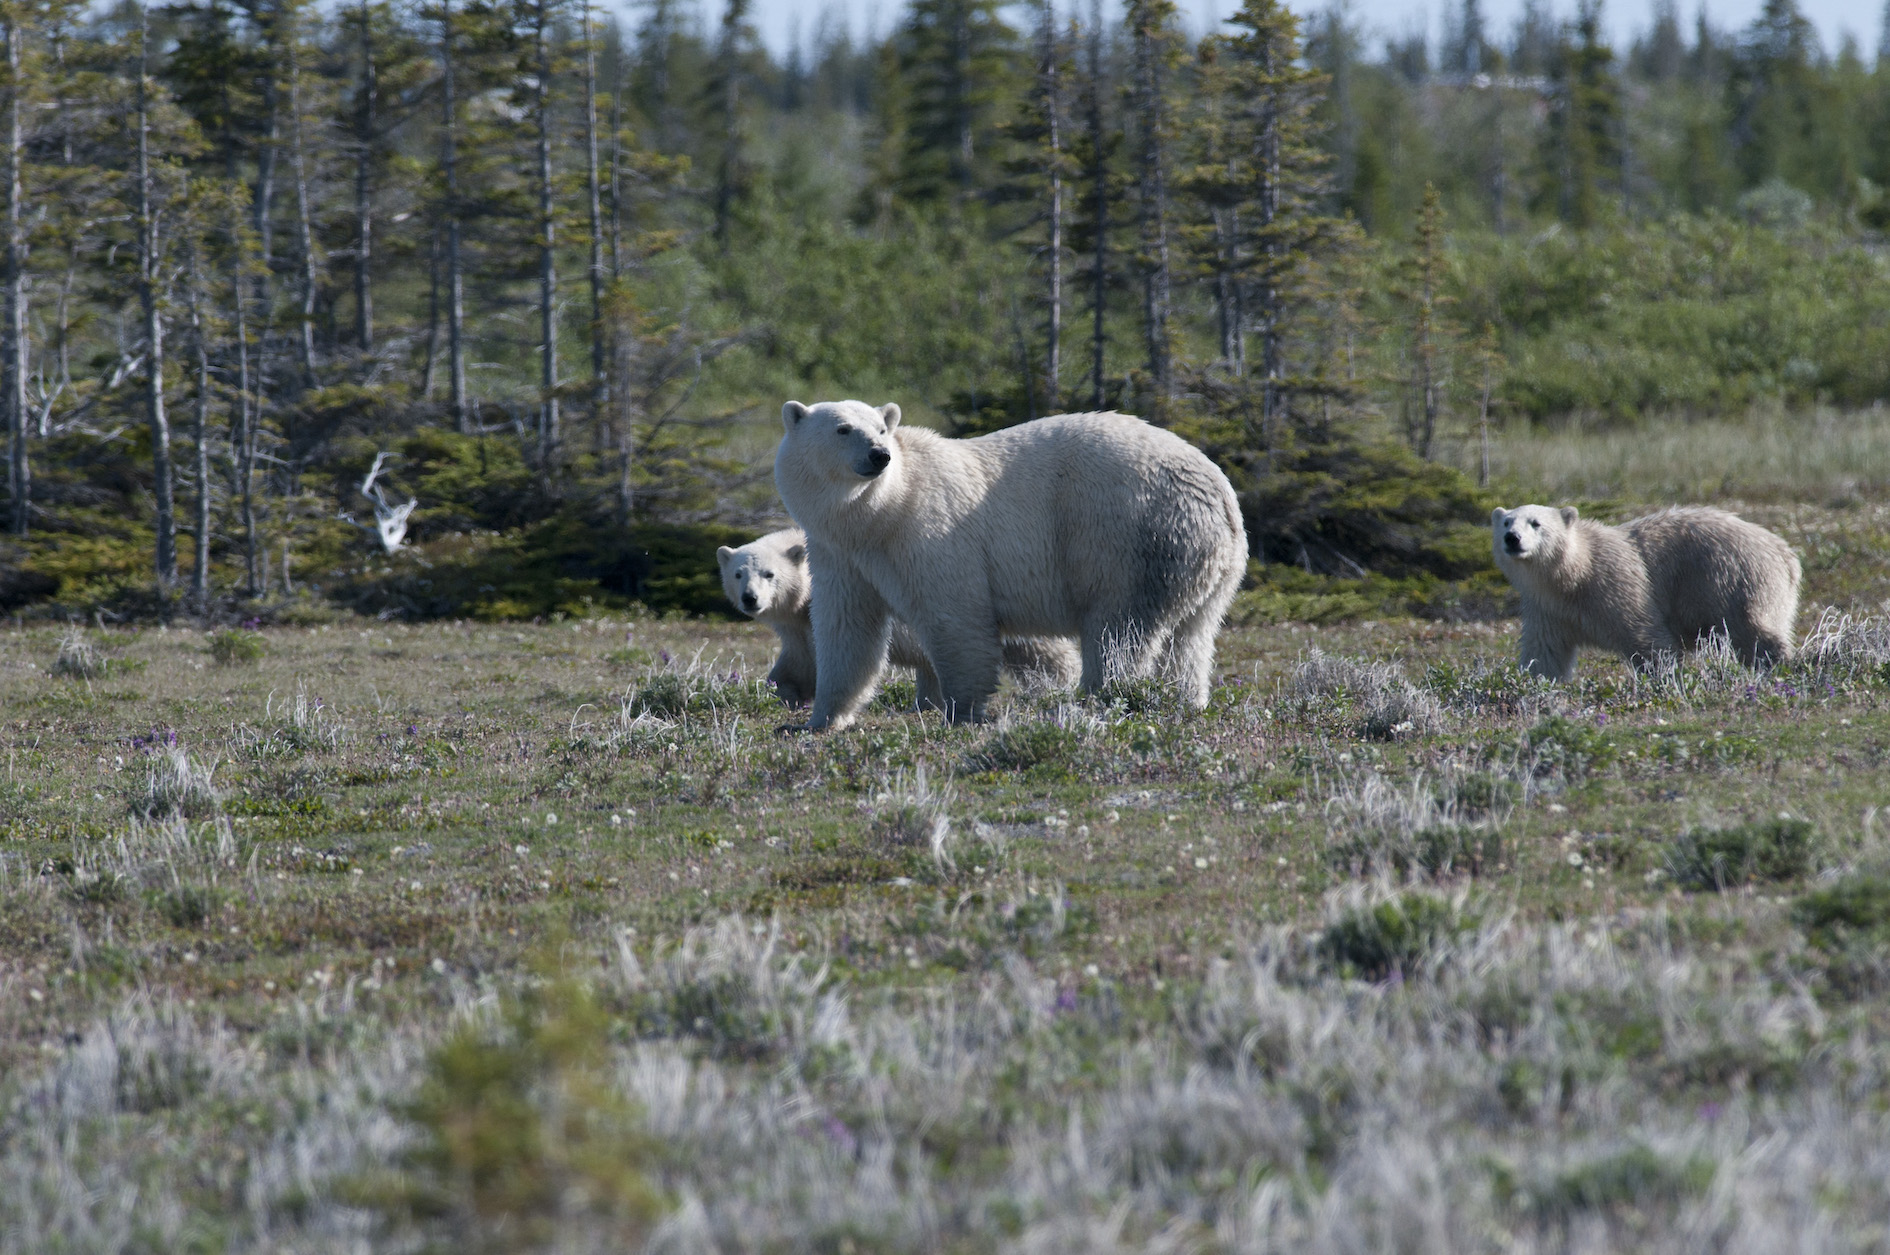 Three polar bears wander through a grassy field